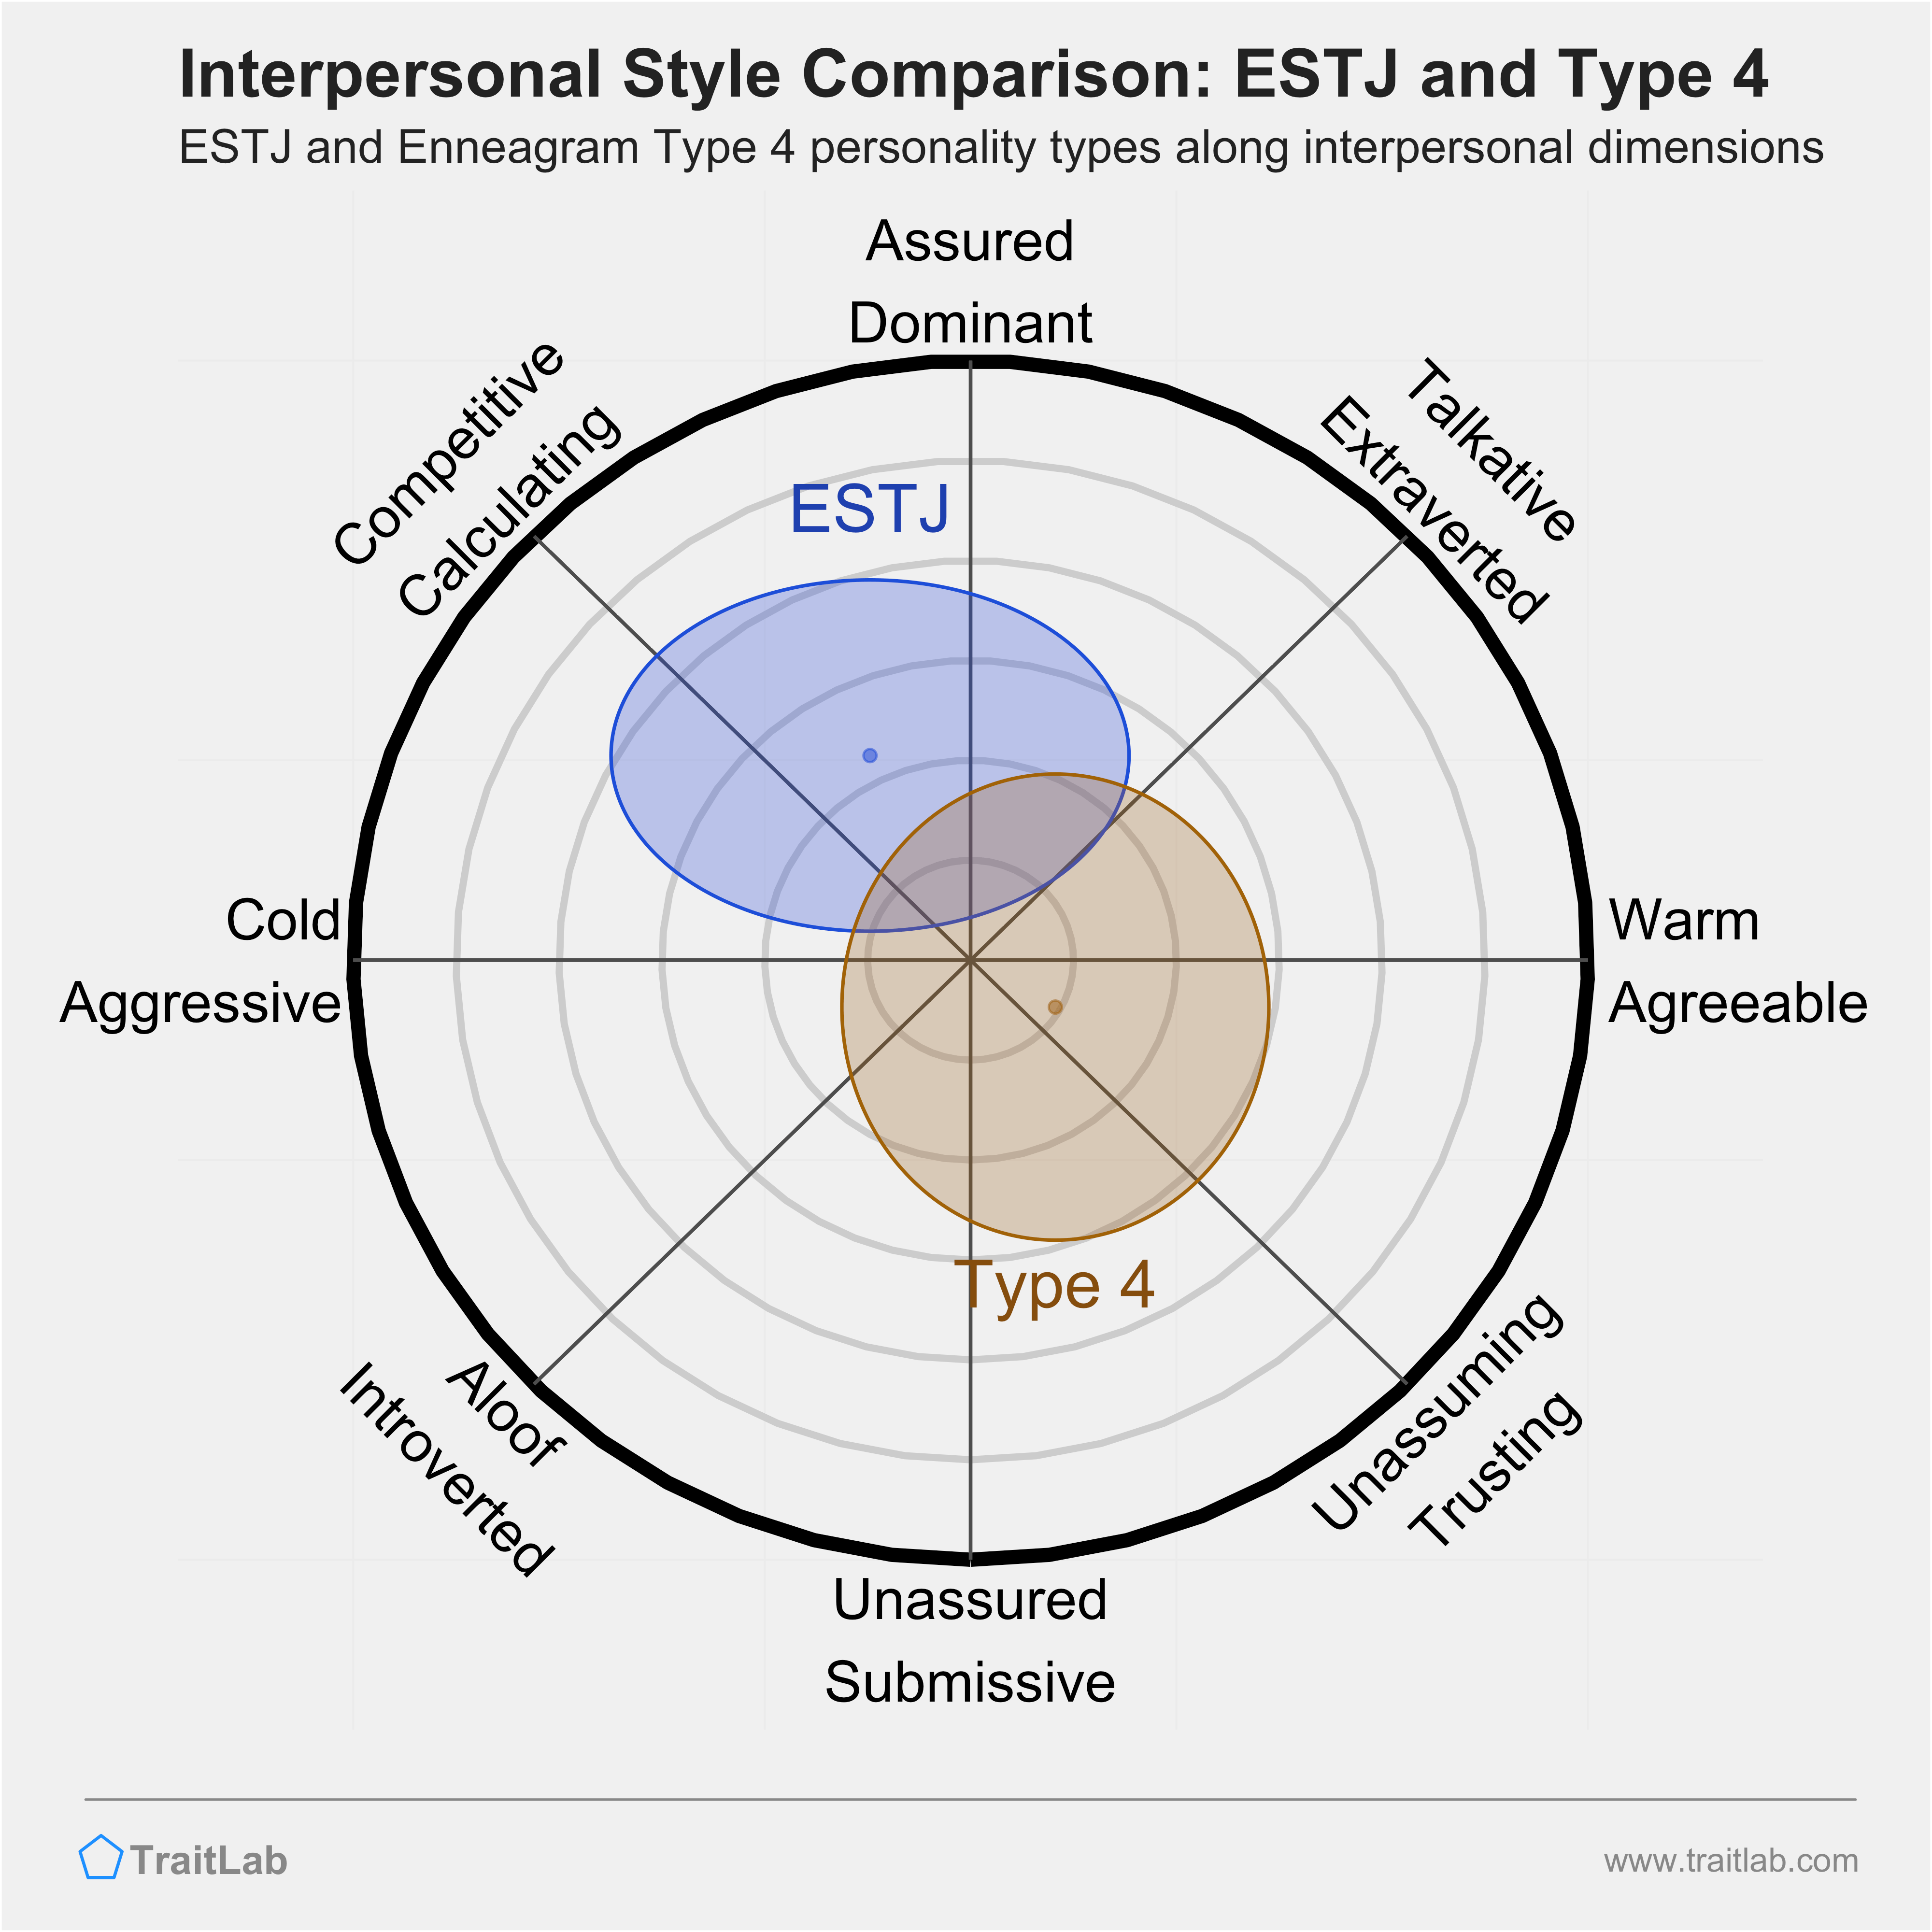 Enneagram ESTJ and Type 4 comparison across interpersonal dimensions